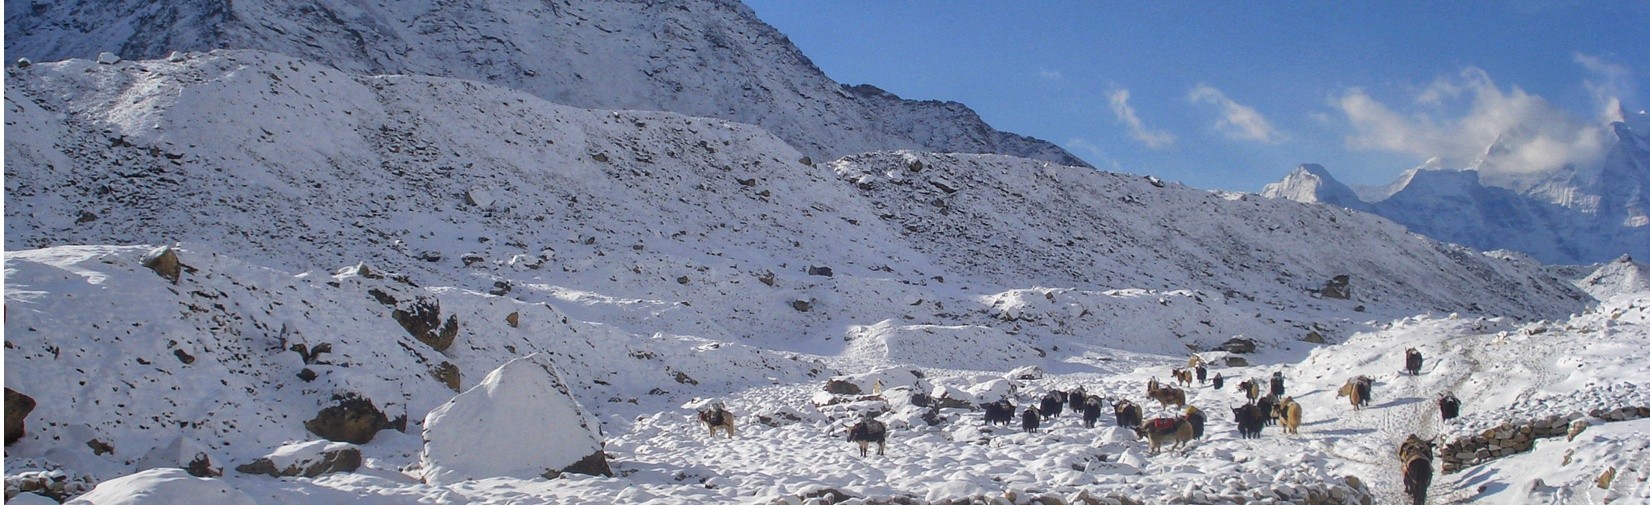 Everest Base Camp Chola Pass Gokyo Trek 